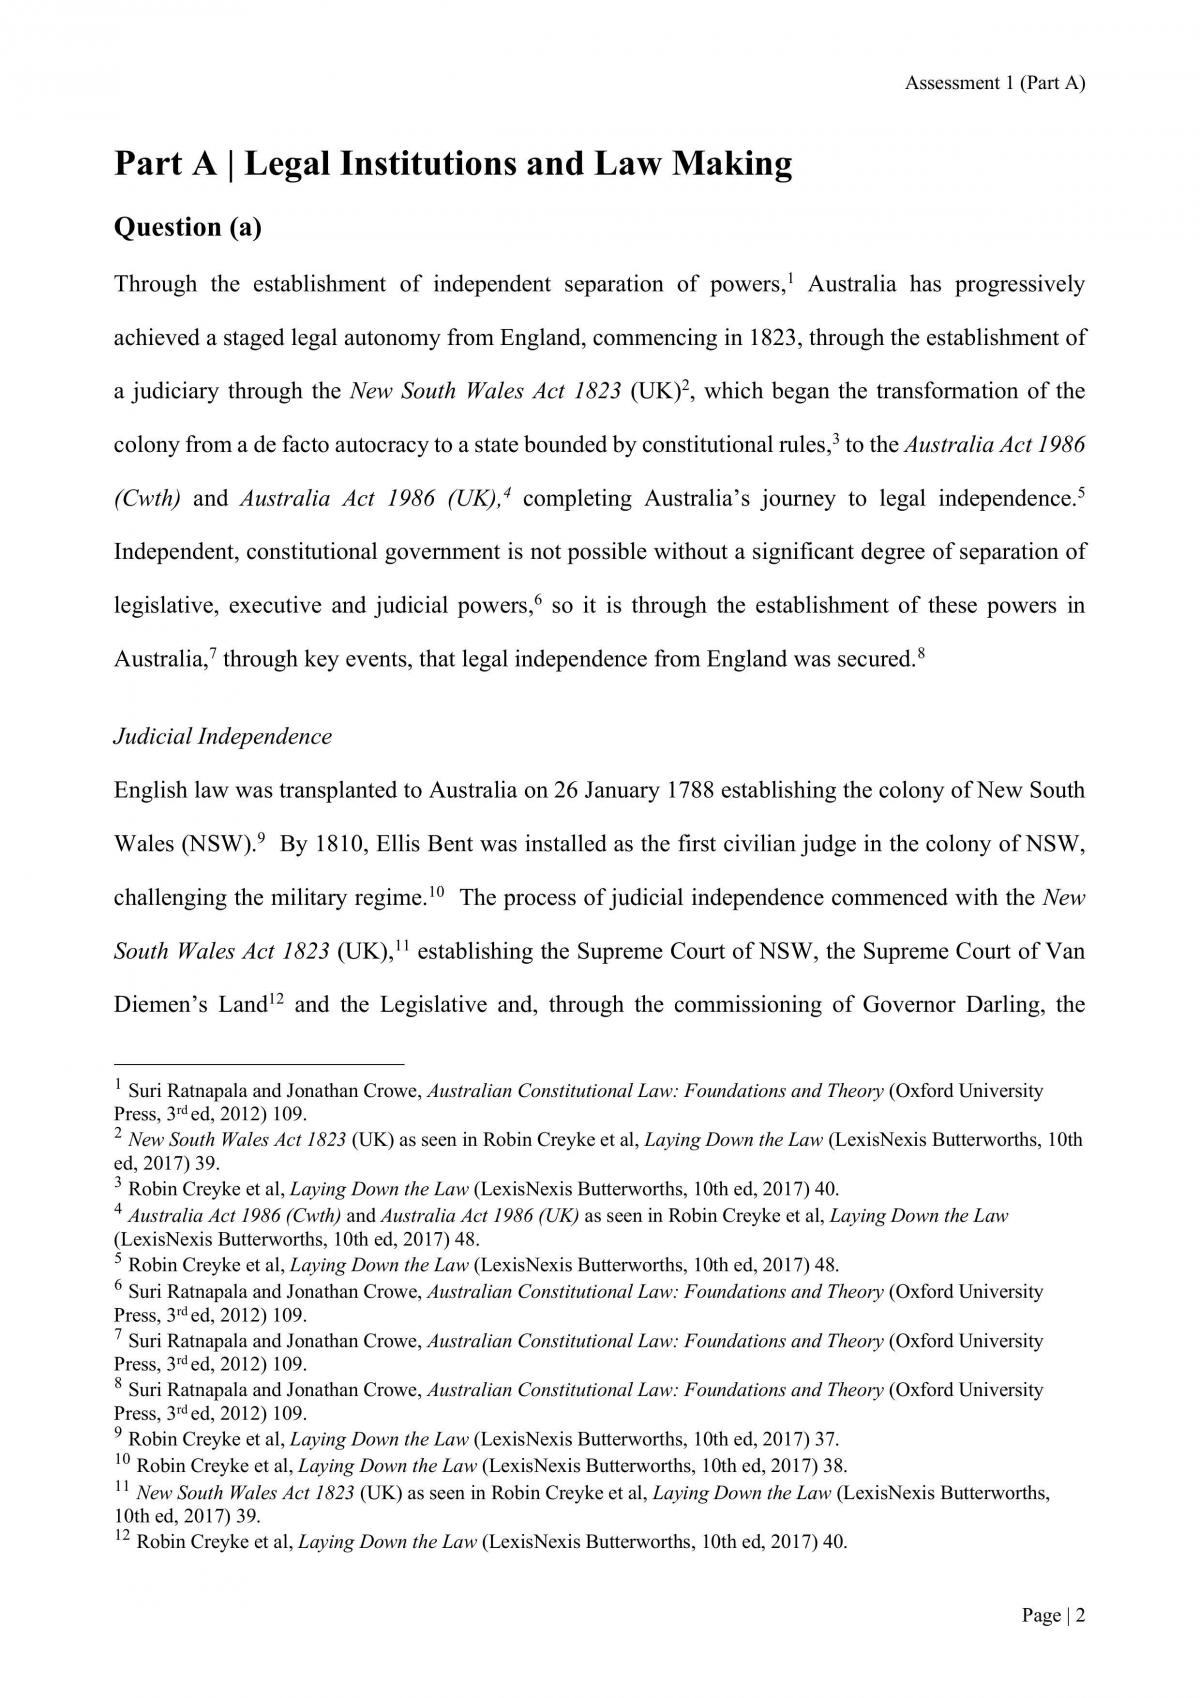 LAWS1201 Assessment 1 Part A - Page 2